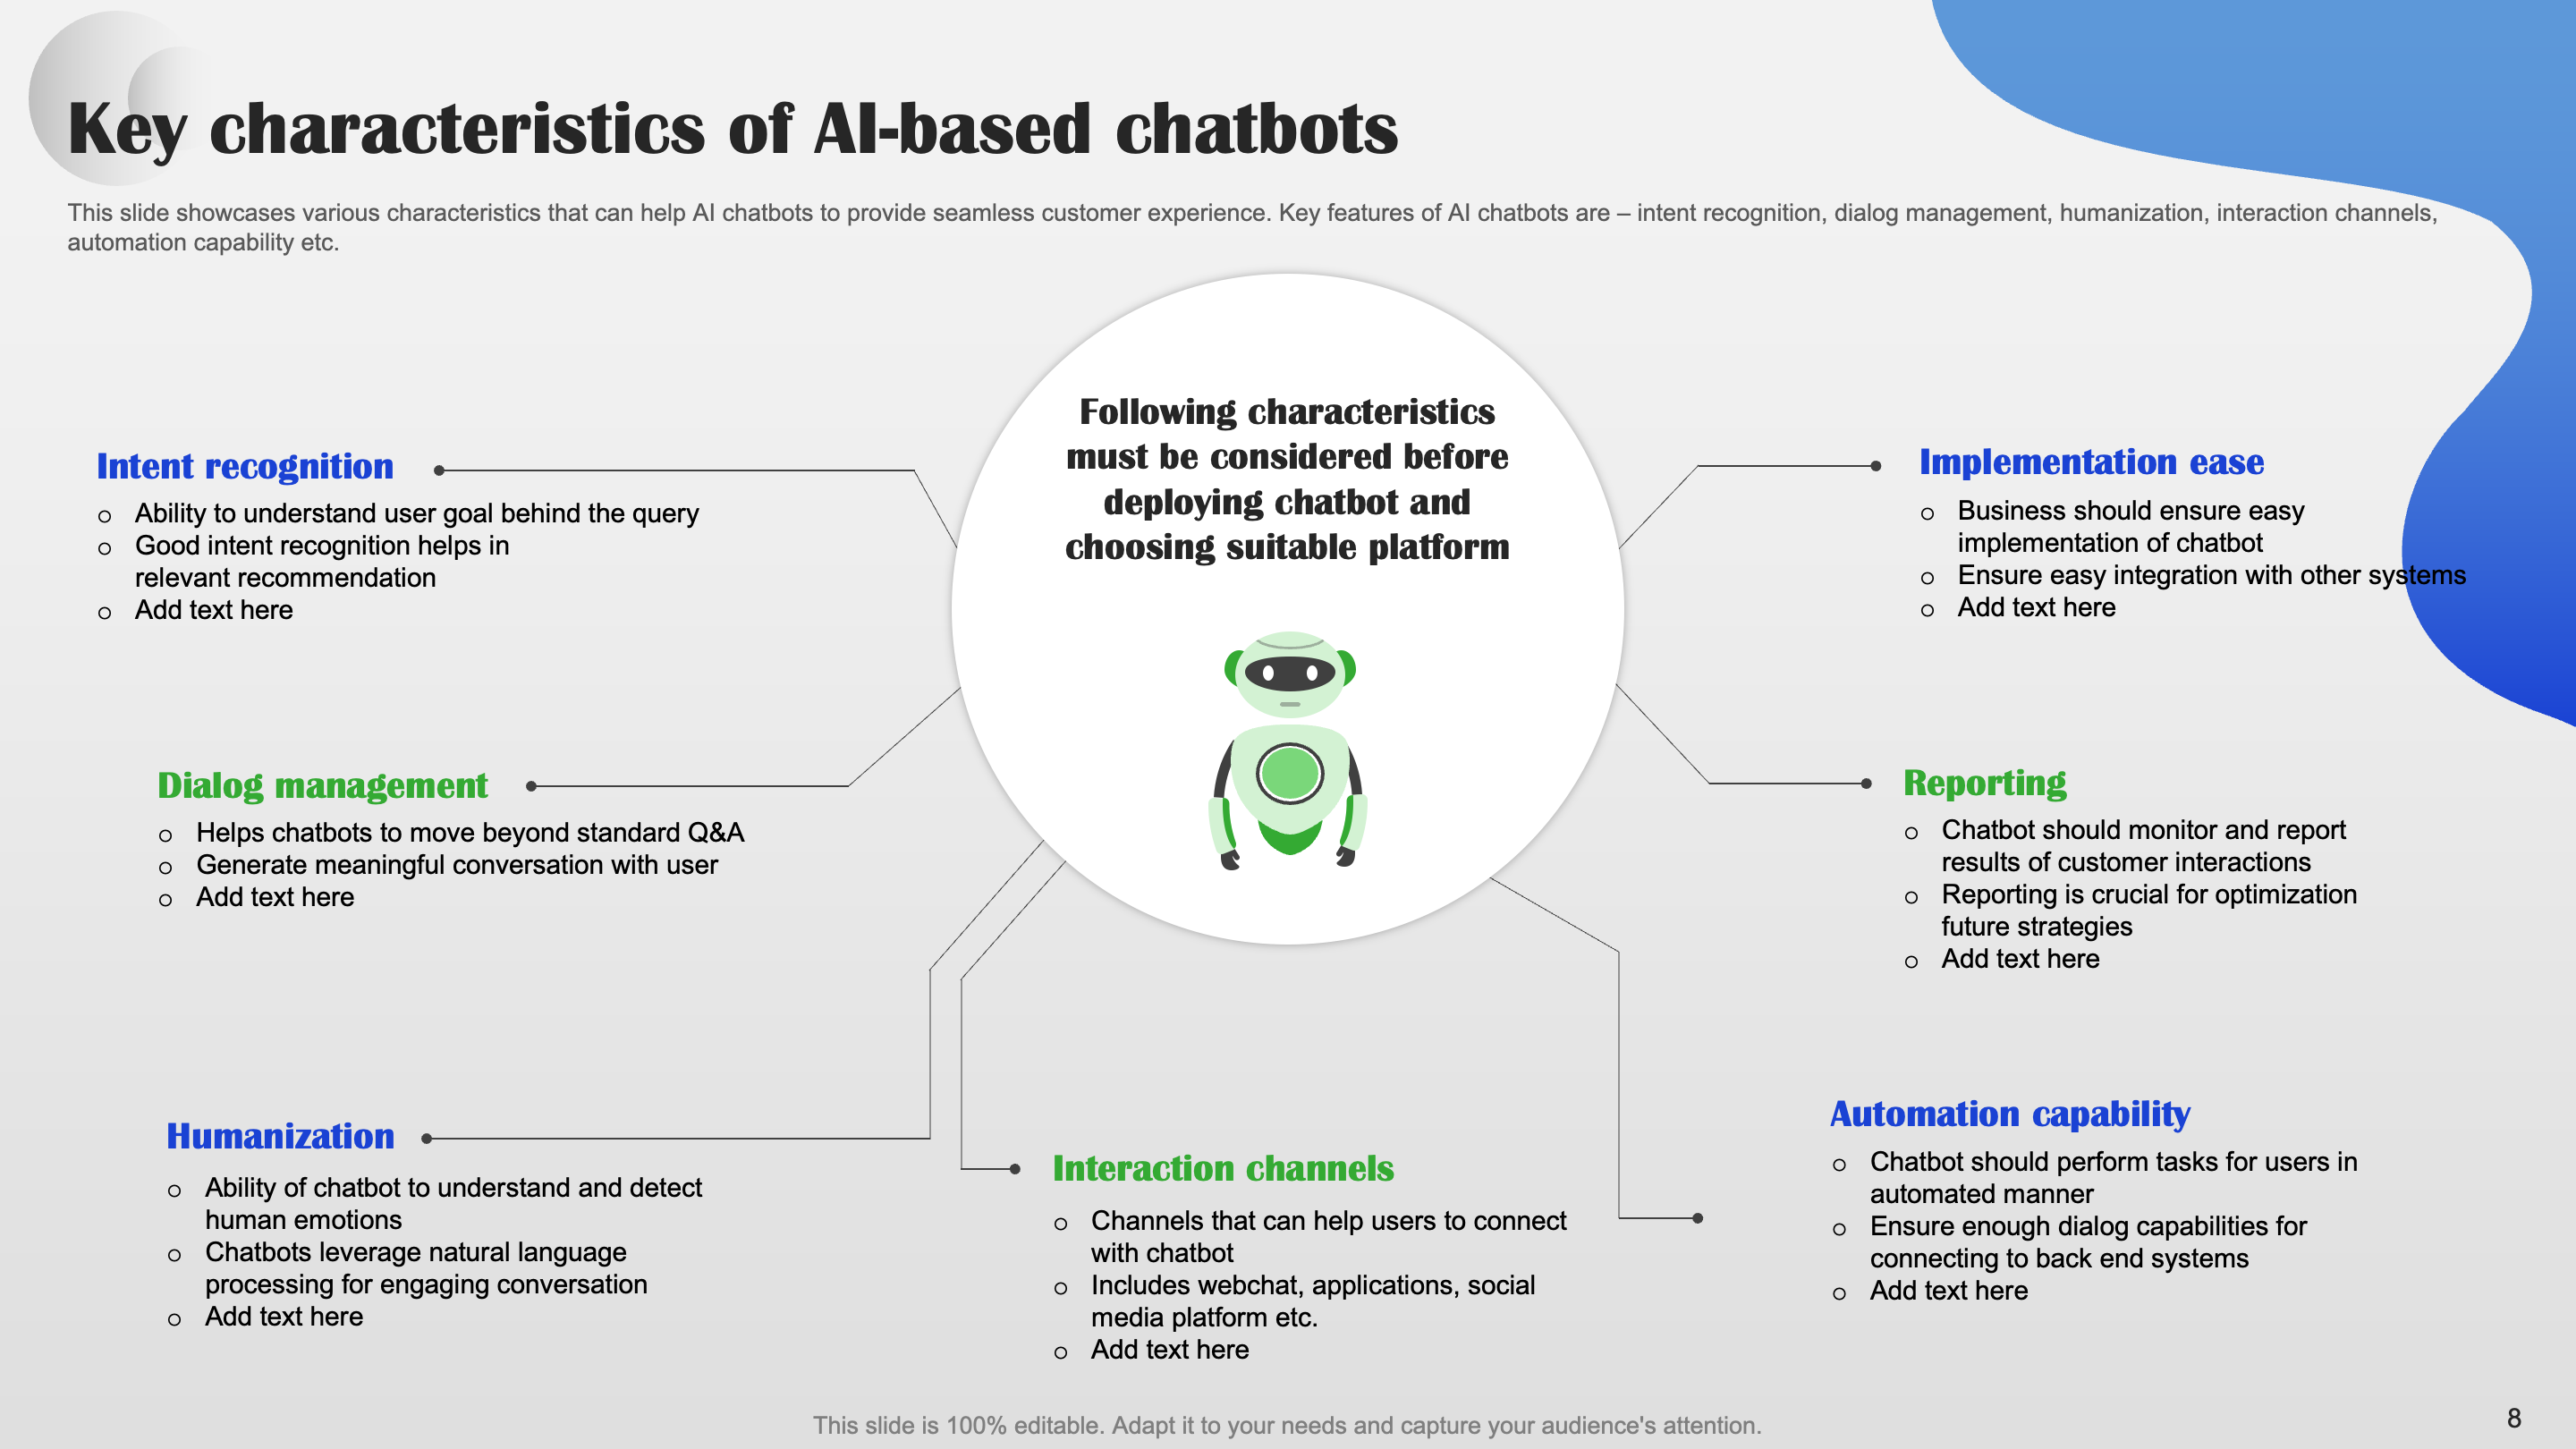 Key Characteristics of AI-Based Chatbots